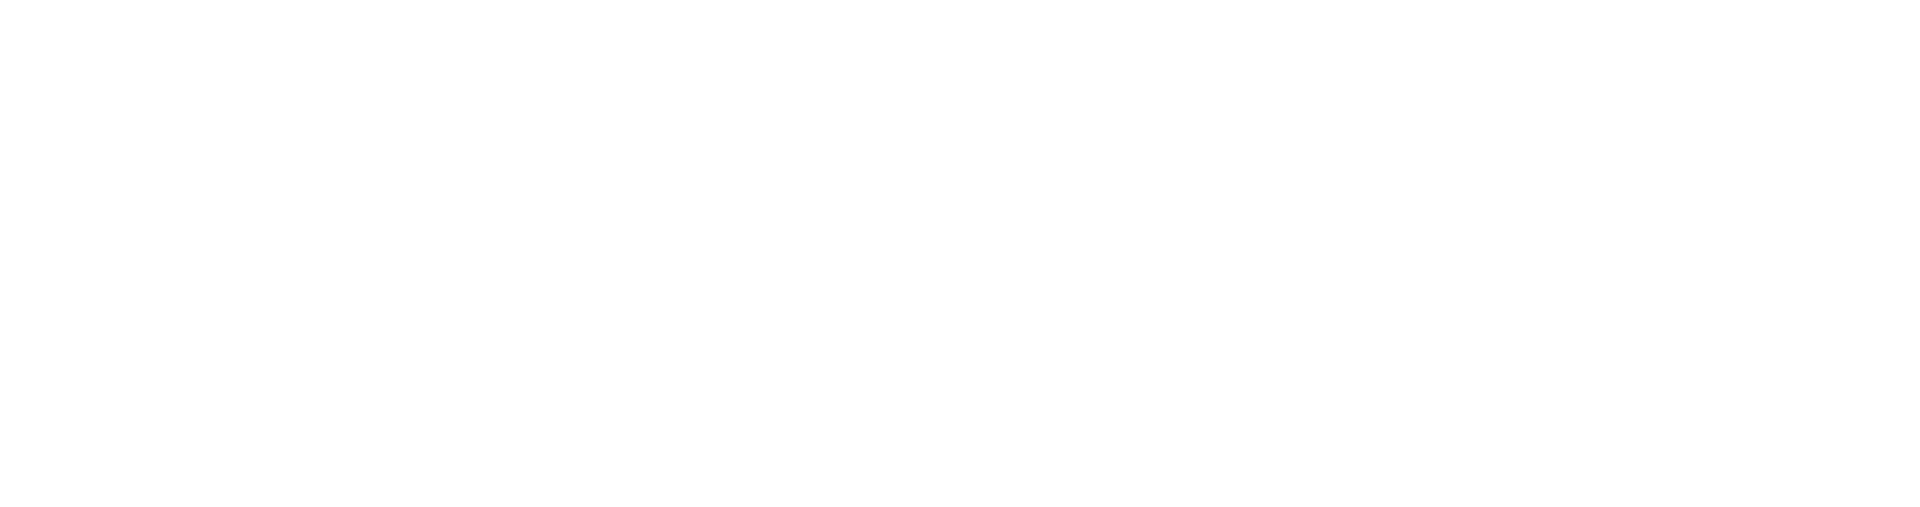 logo_chateau_larg_blanc.png